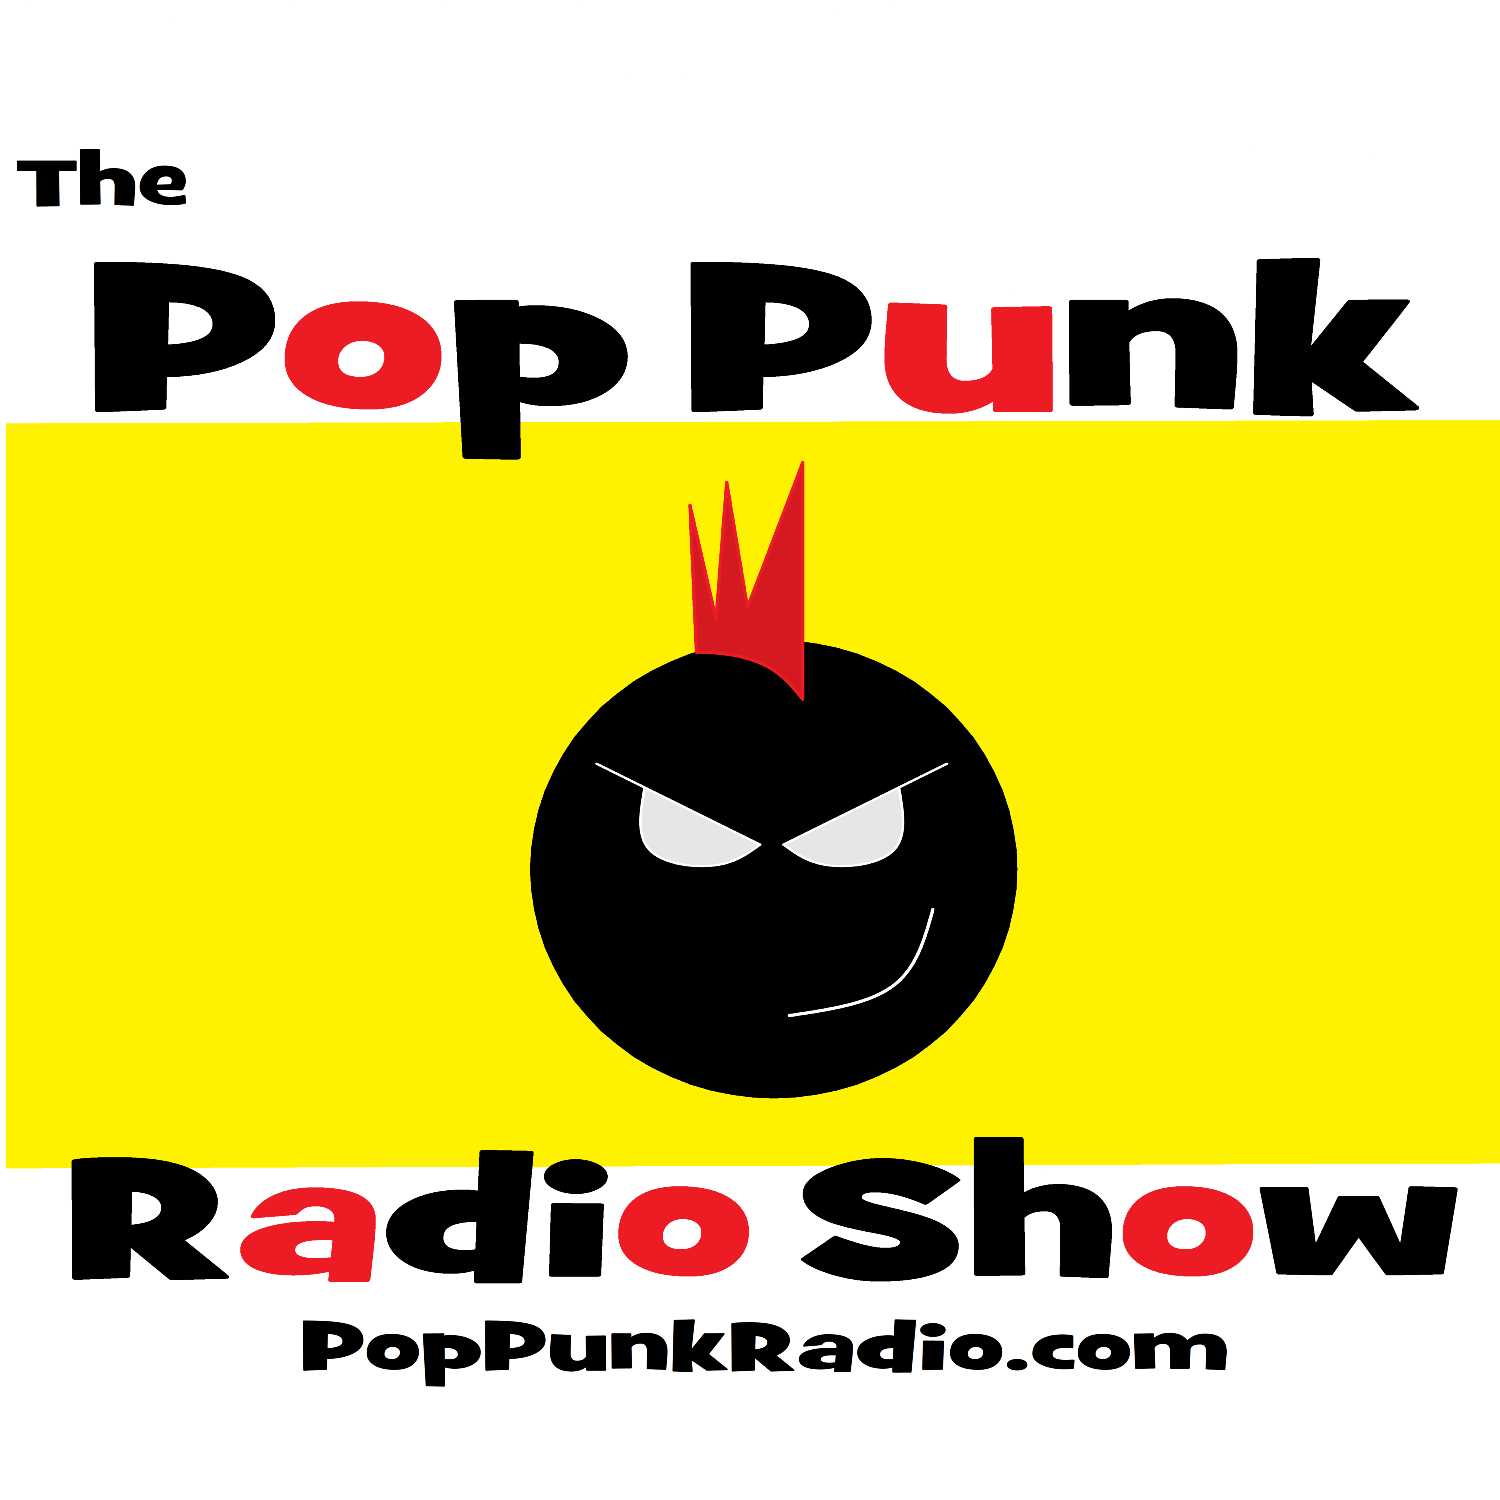 Pop Punk Radio Show: Episode 10 - "Surf, Ska-te, & Punk"